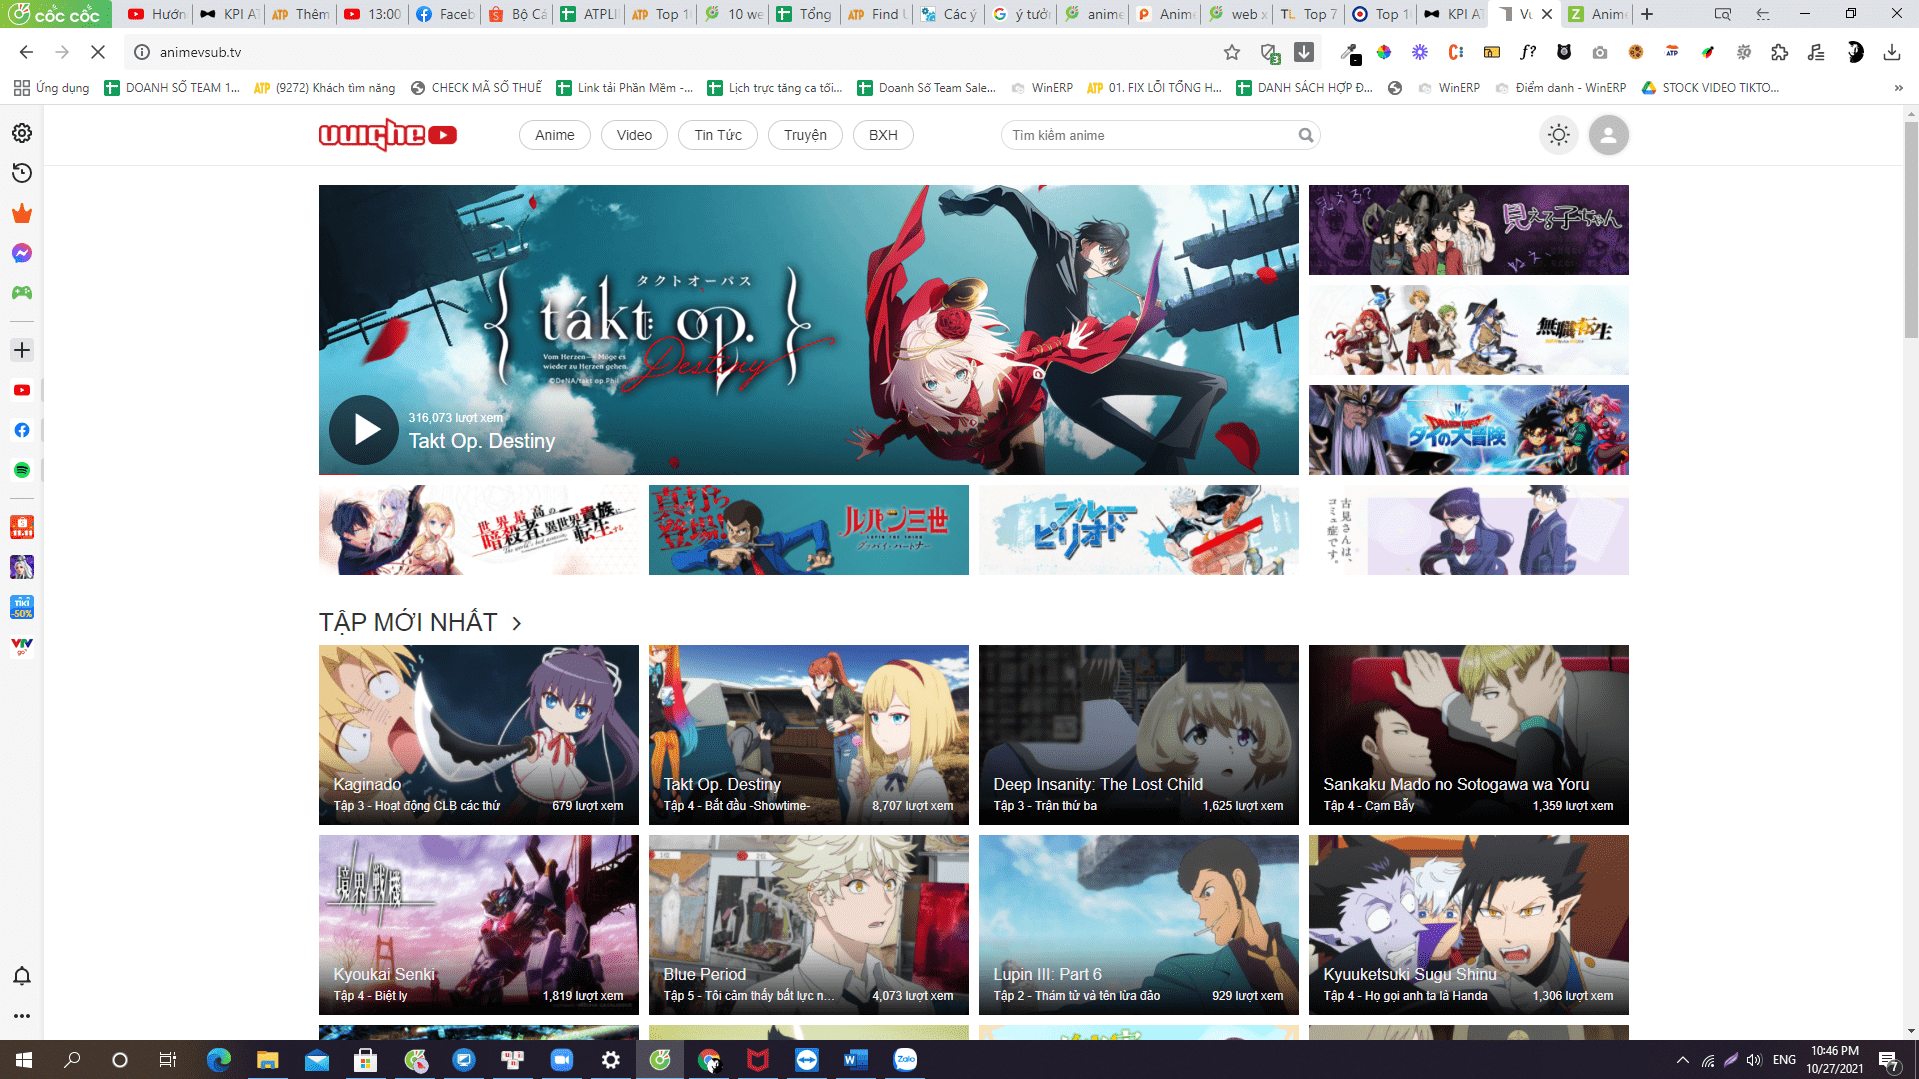 Anime Vietsub Online - Xem Phim Anime mới nhất